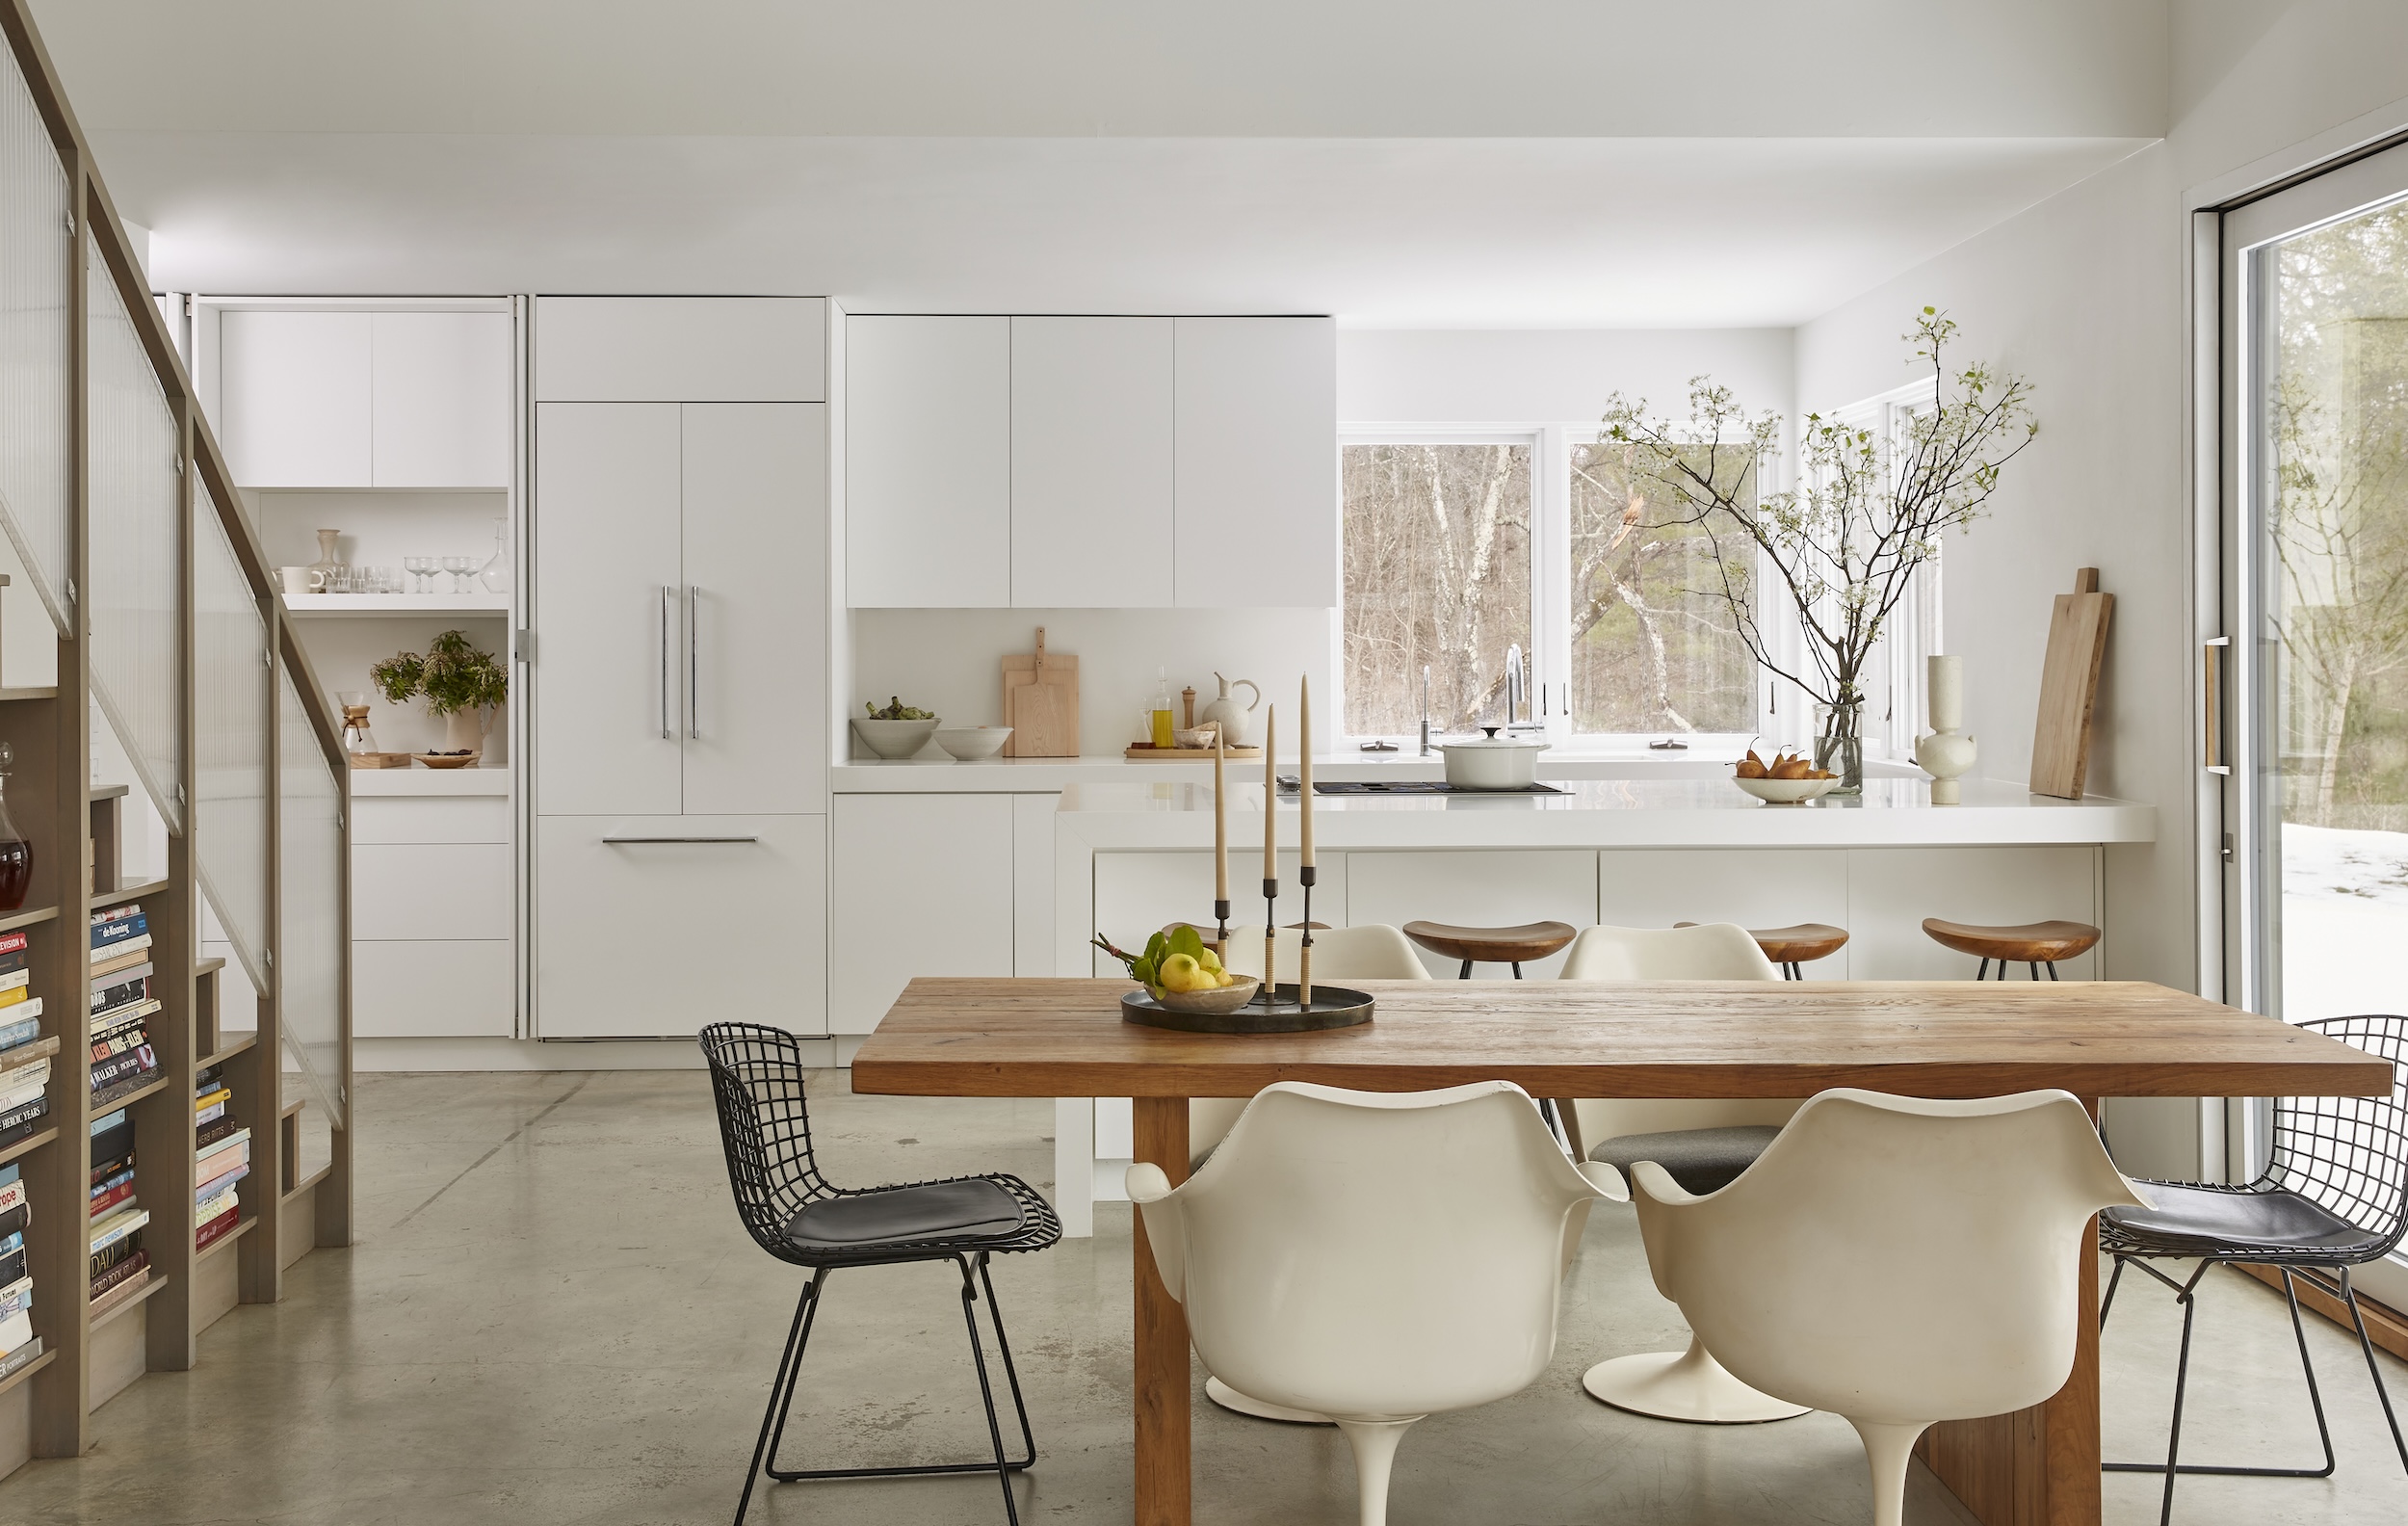 Tina-Ramchandani-Interior-Design-Stone-Ridge-Kitchen-Kitchen-Full-View